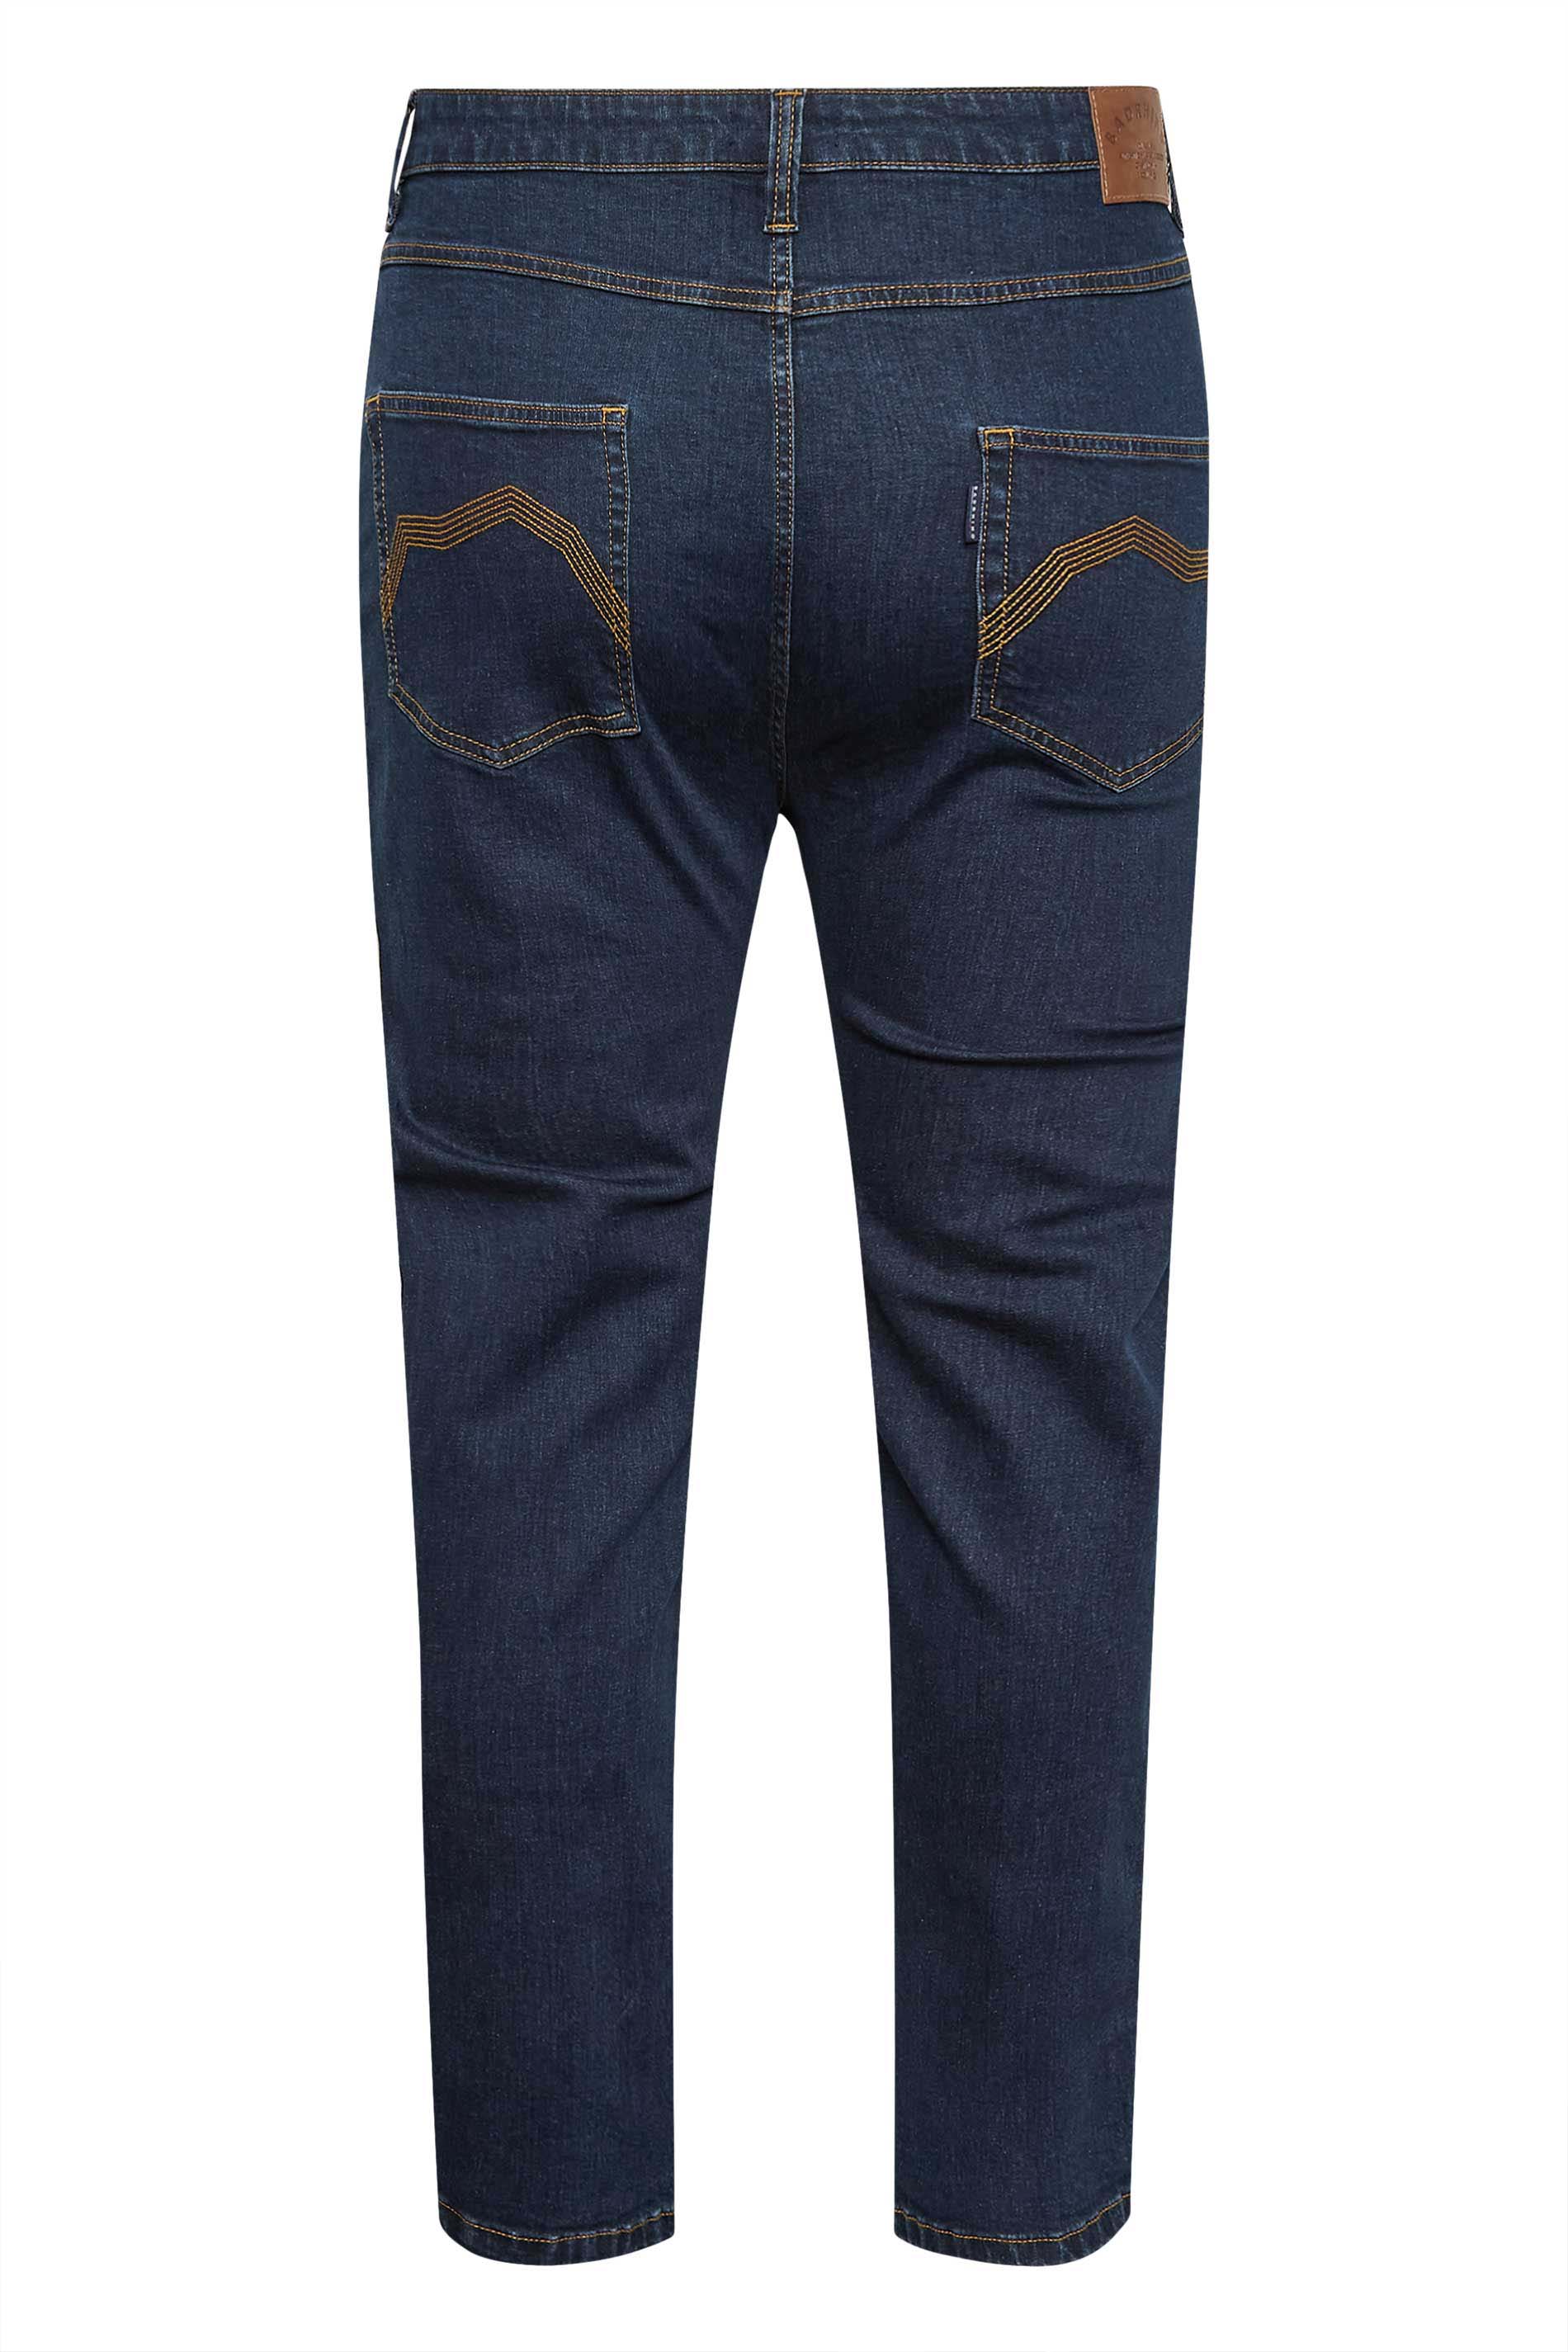 BadRhino Big & Tall Indigo Dark Blue Stretch Jeans | BadRhino 3